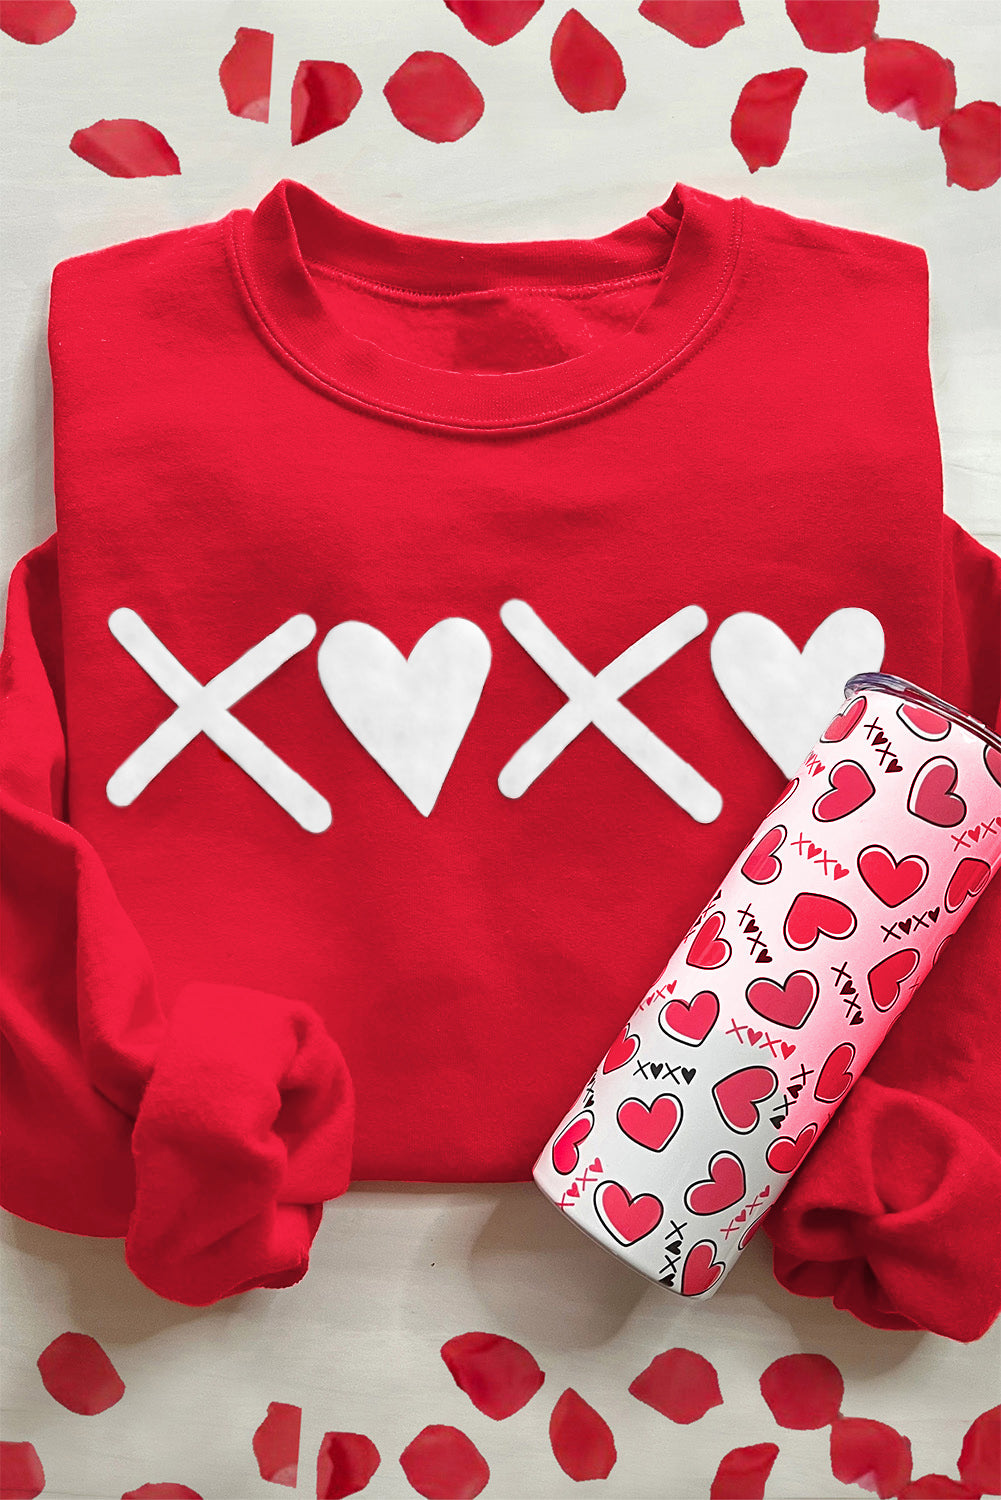 Puff XOXO Print Valentines Heart Sweatshirt